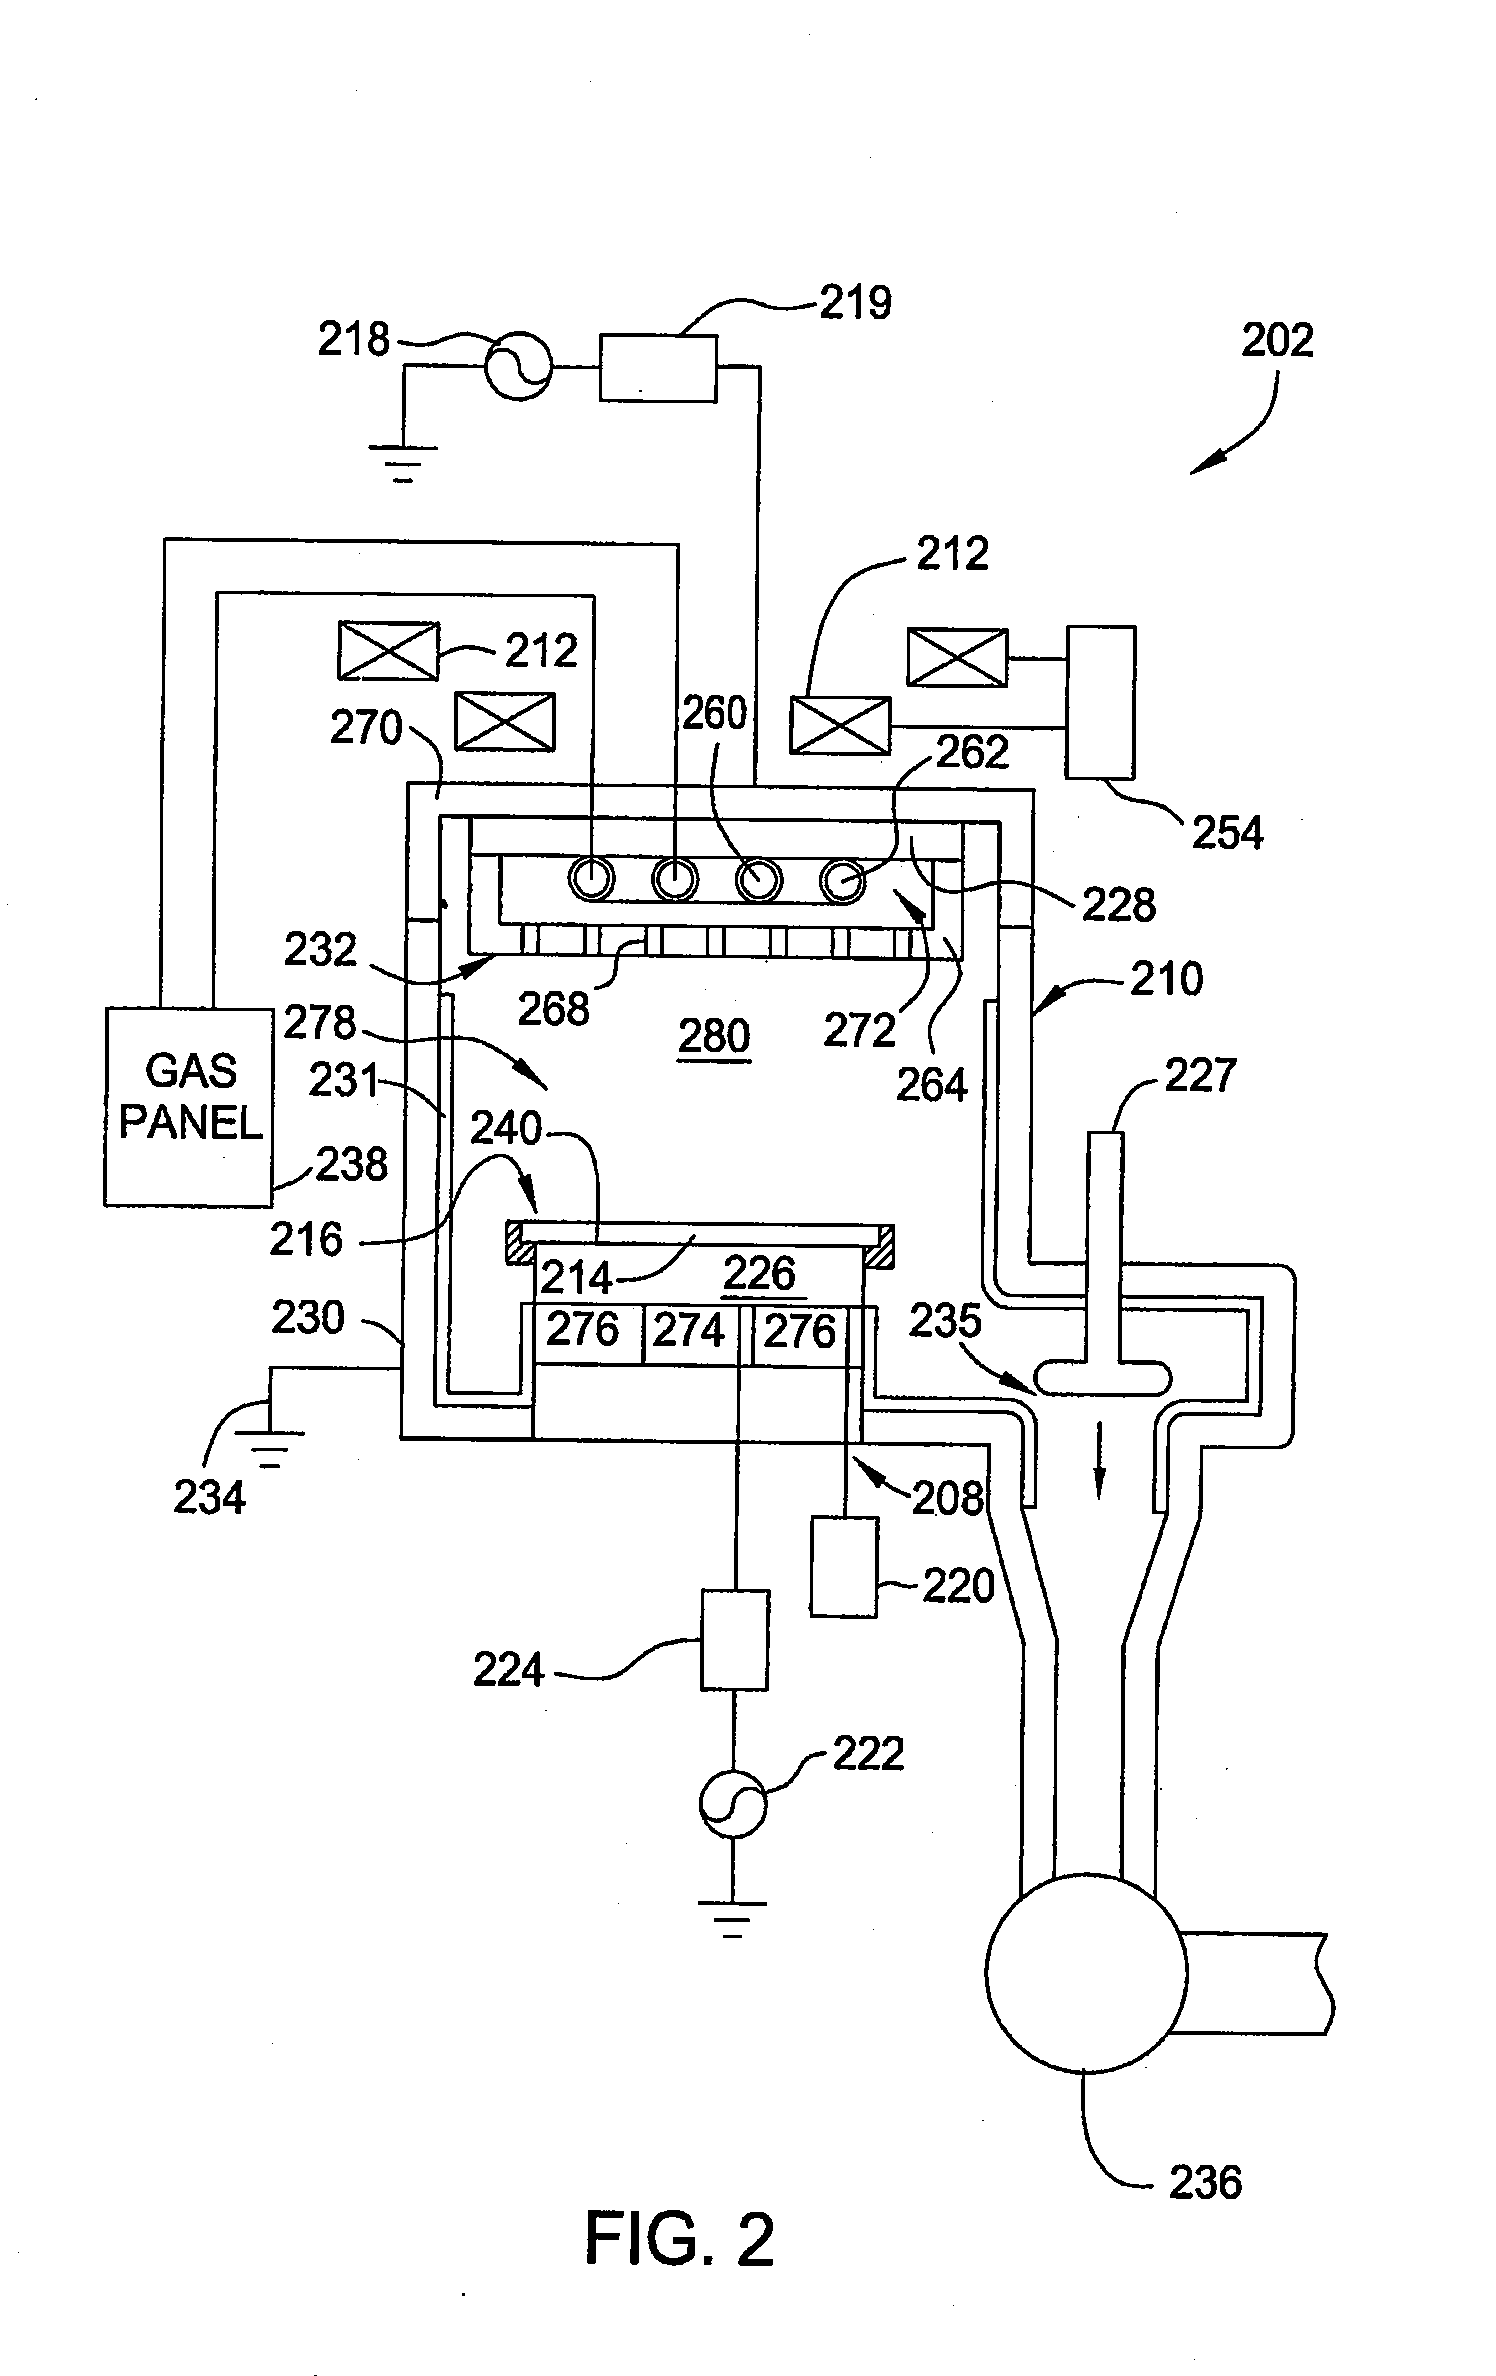 Method for fabricating plasma reactor parts